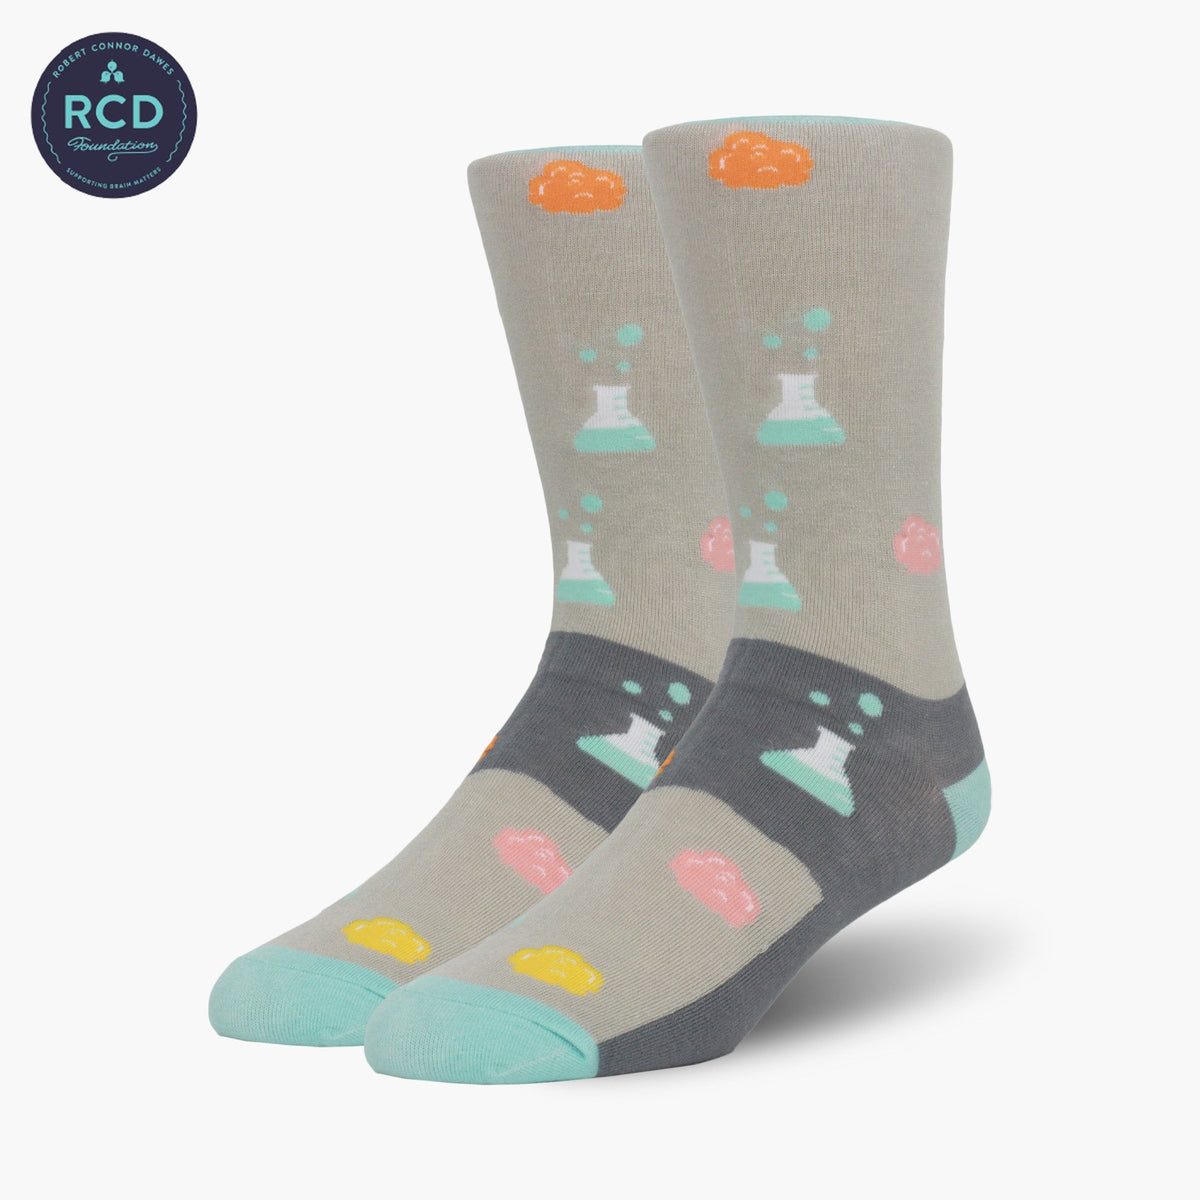 RCDF Bamboo Socks